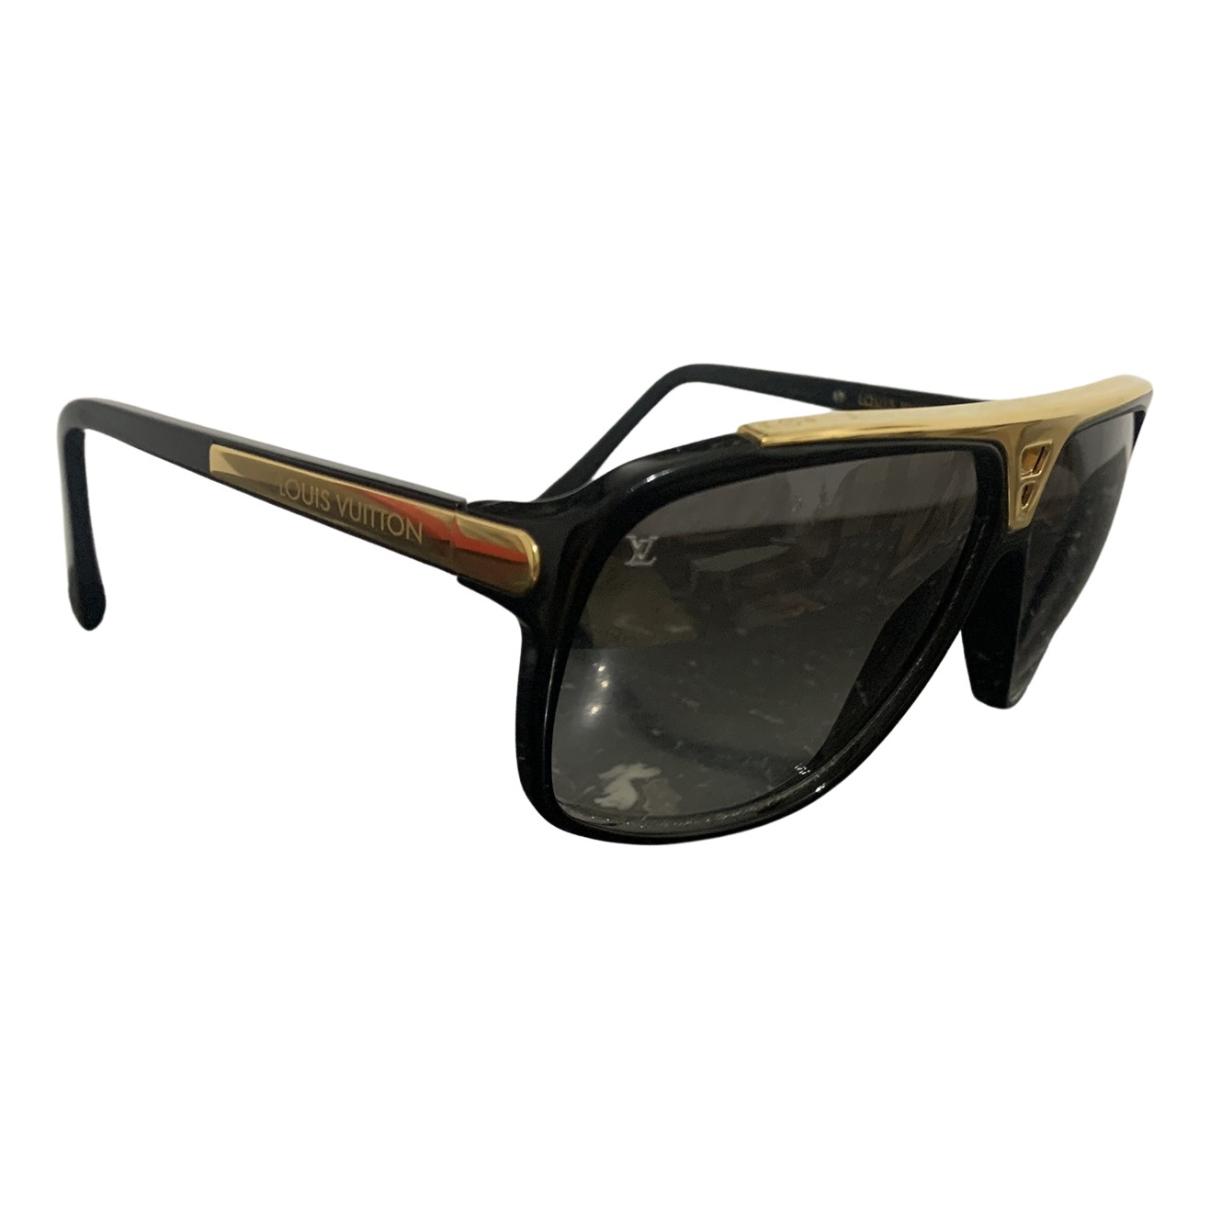 LV 1034/S 900 53-20 - Glasses24